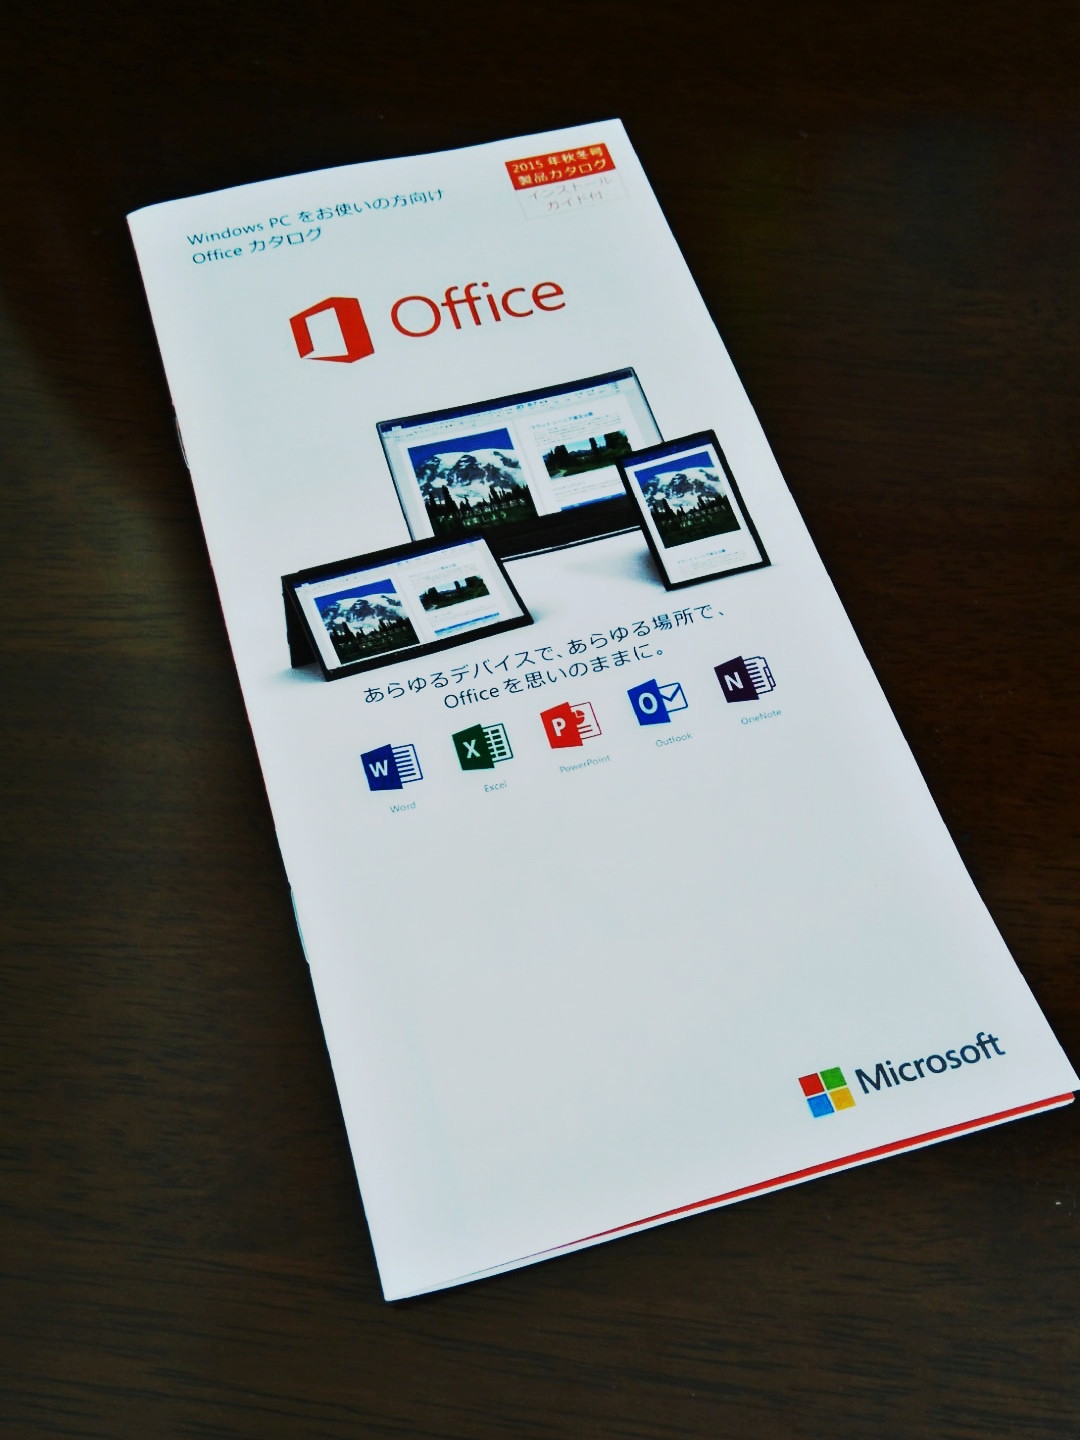 Microsoft Office 16 Academic 購入方法 価格まとめ Gadget Initiative